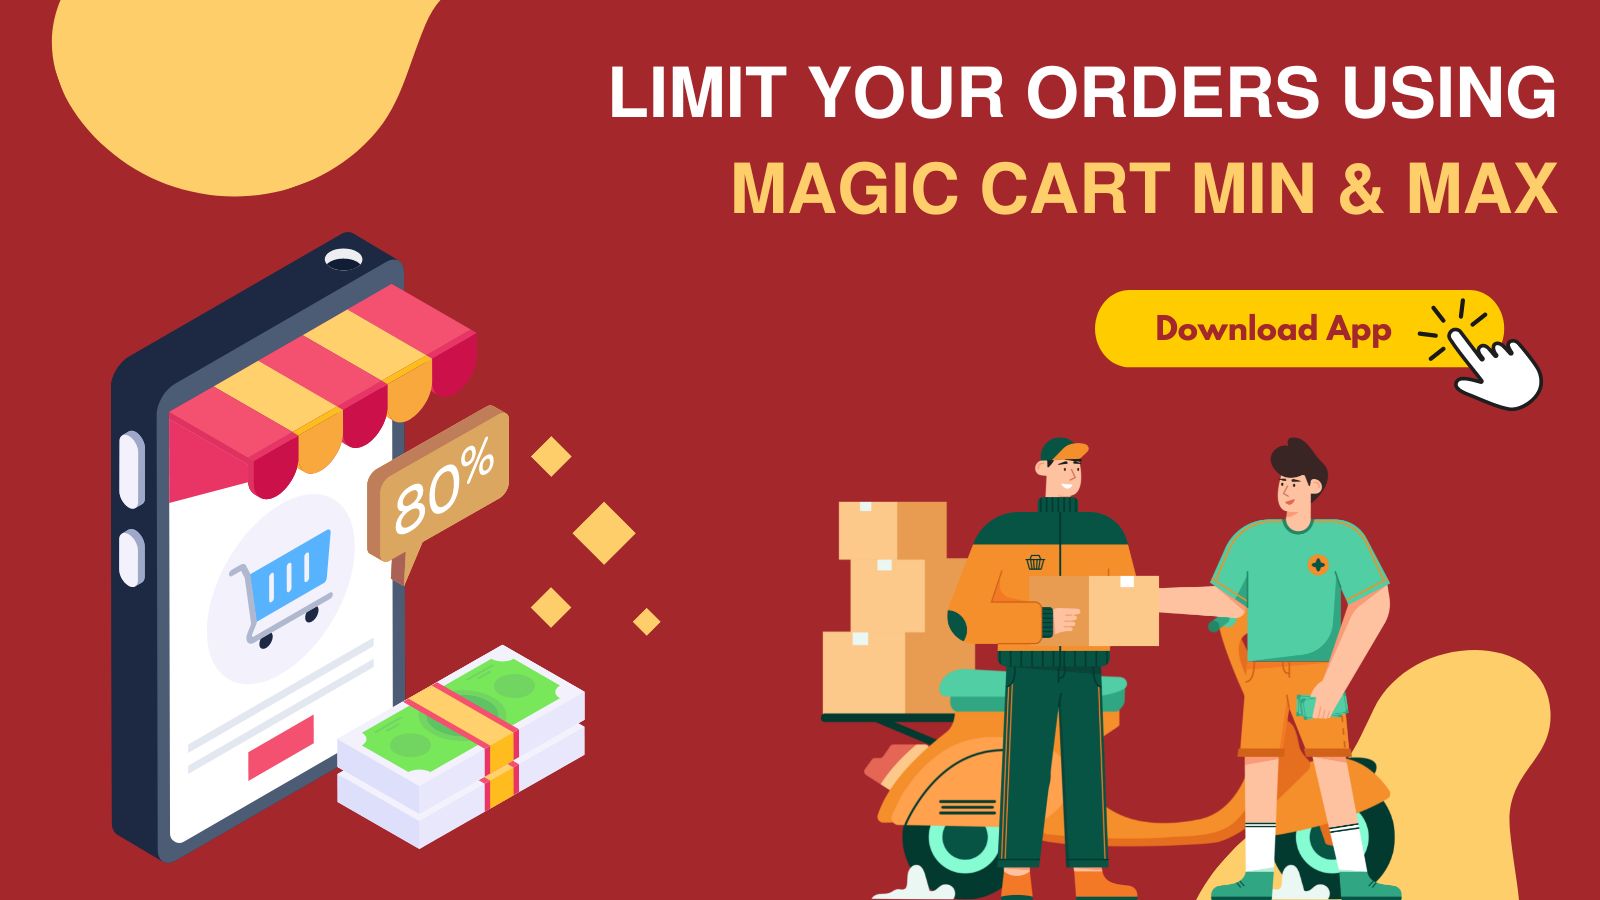 Magic Cart Min & Max